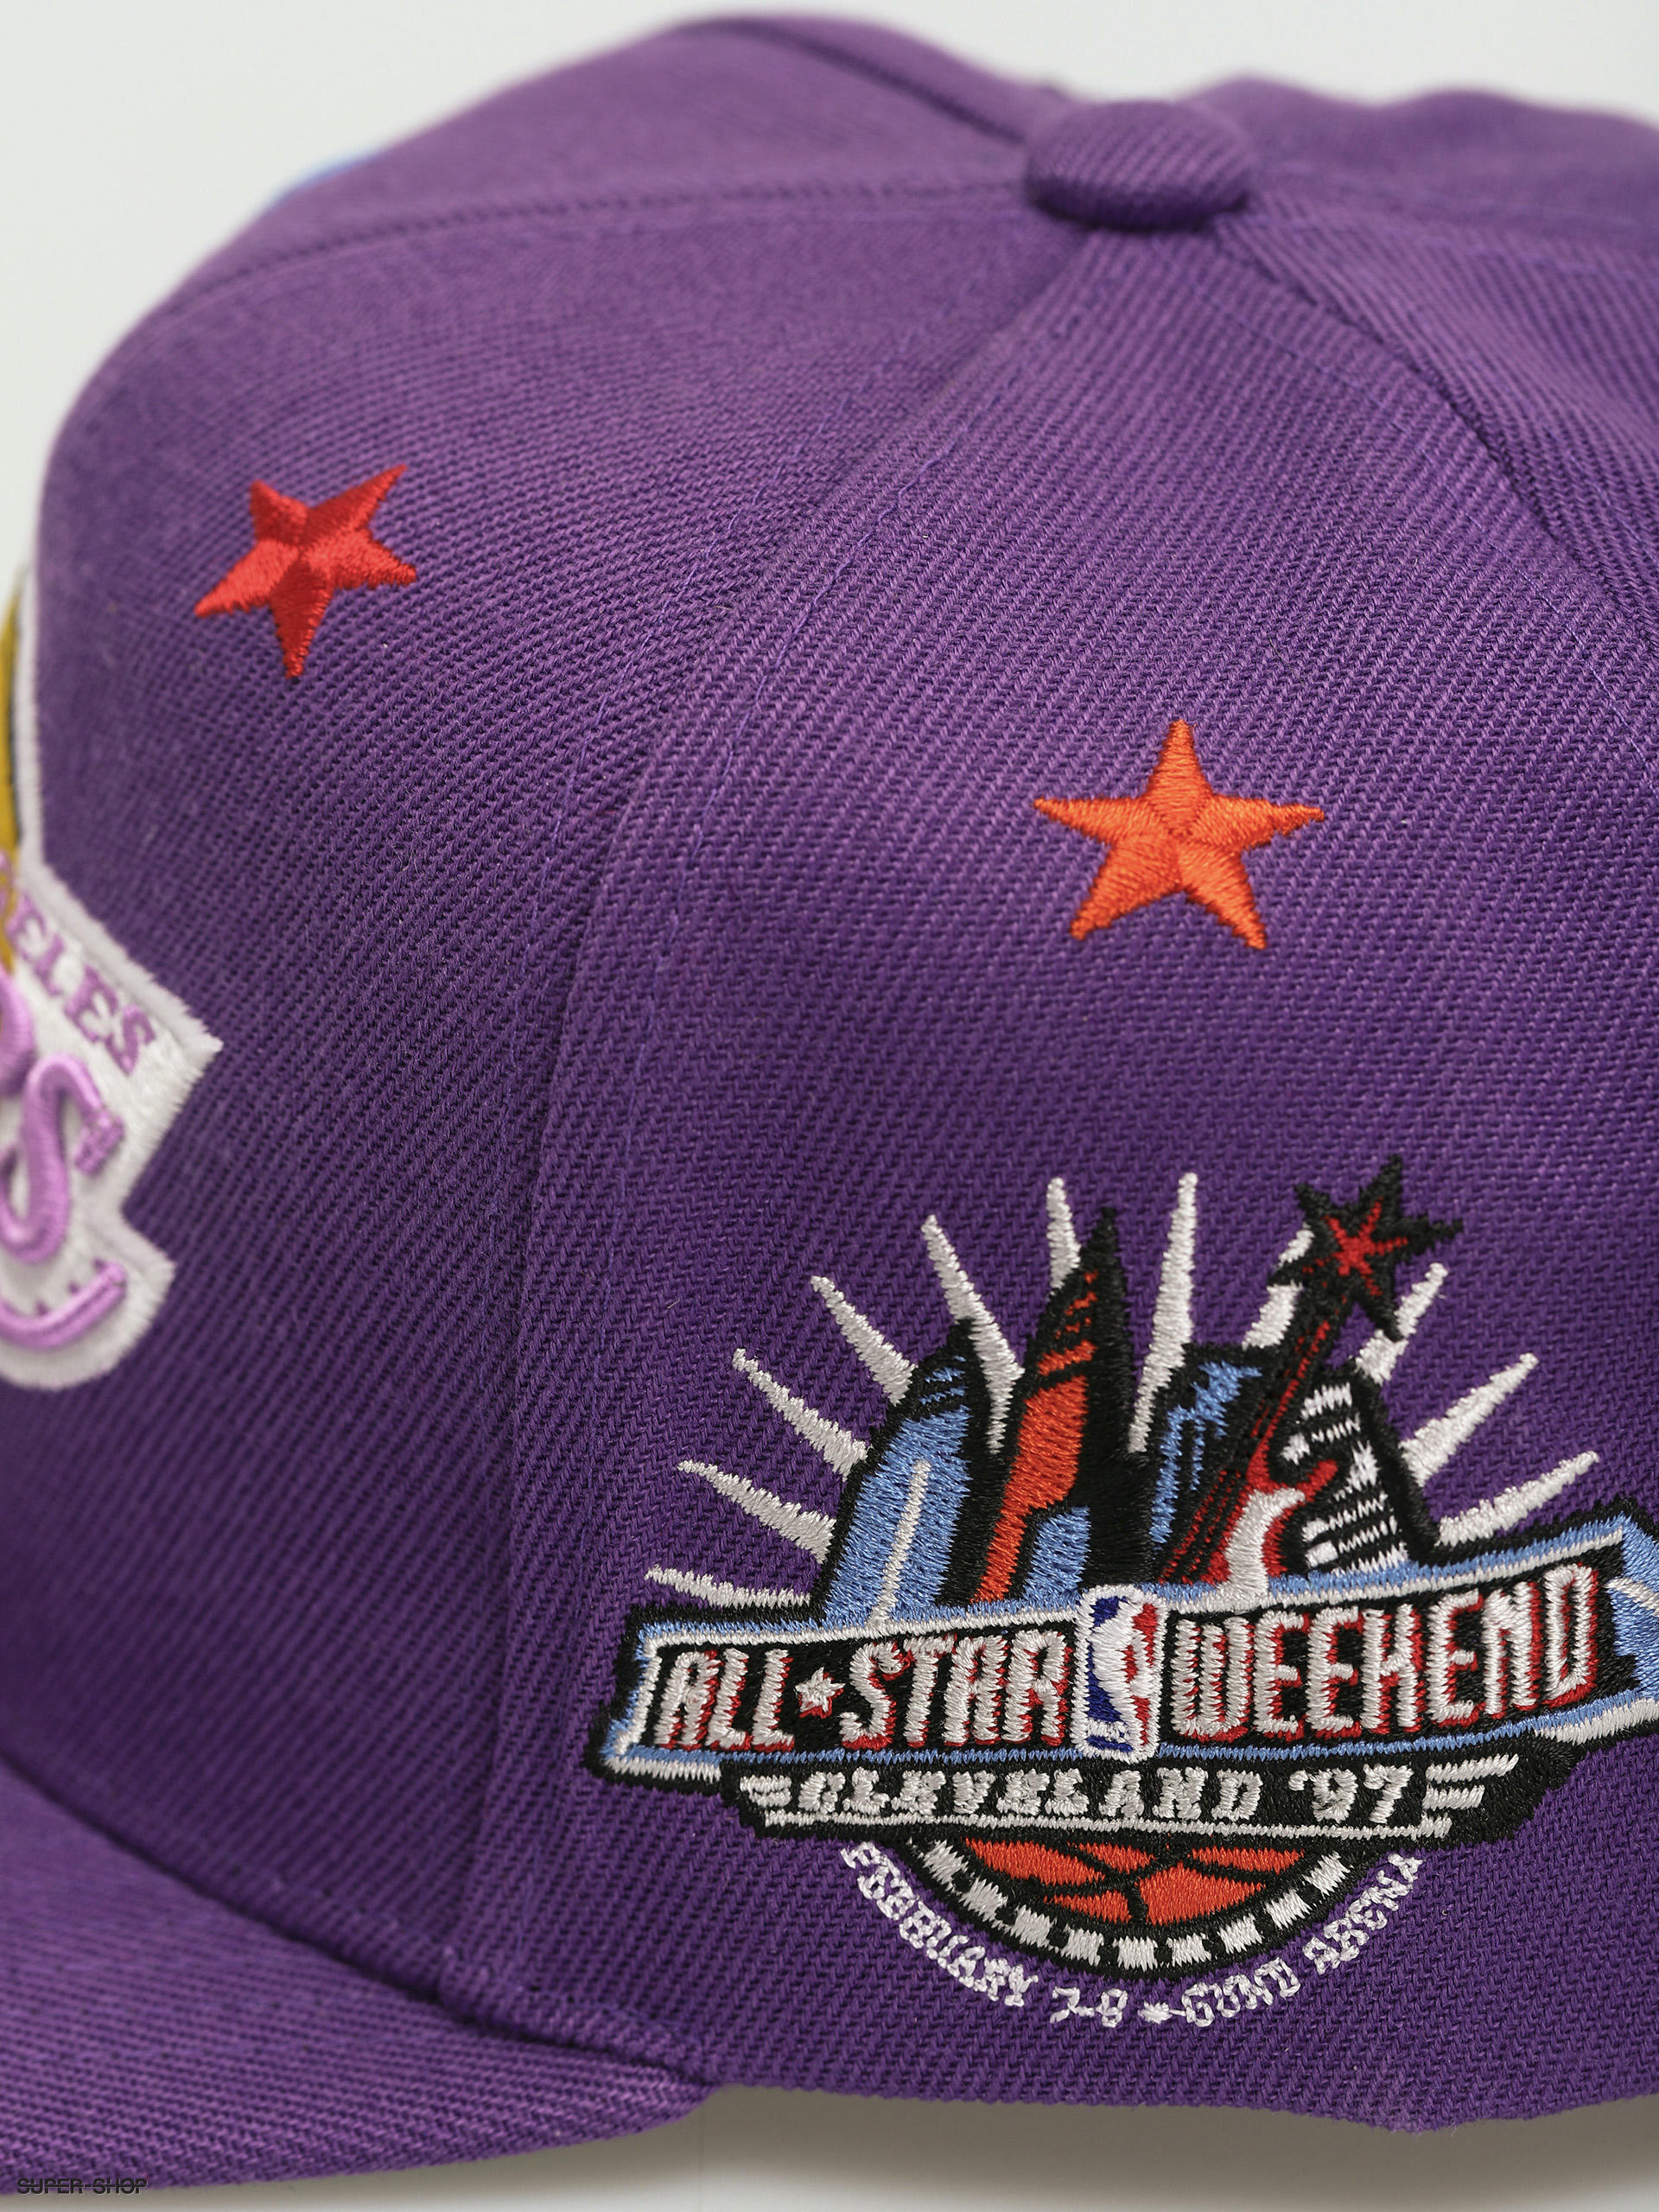 Los Angeles Lakers Purple Mitchell & Ness Snapback Hat